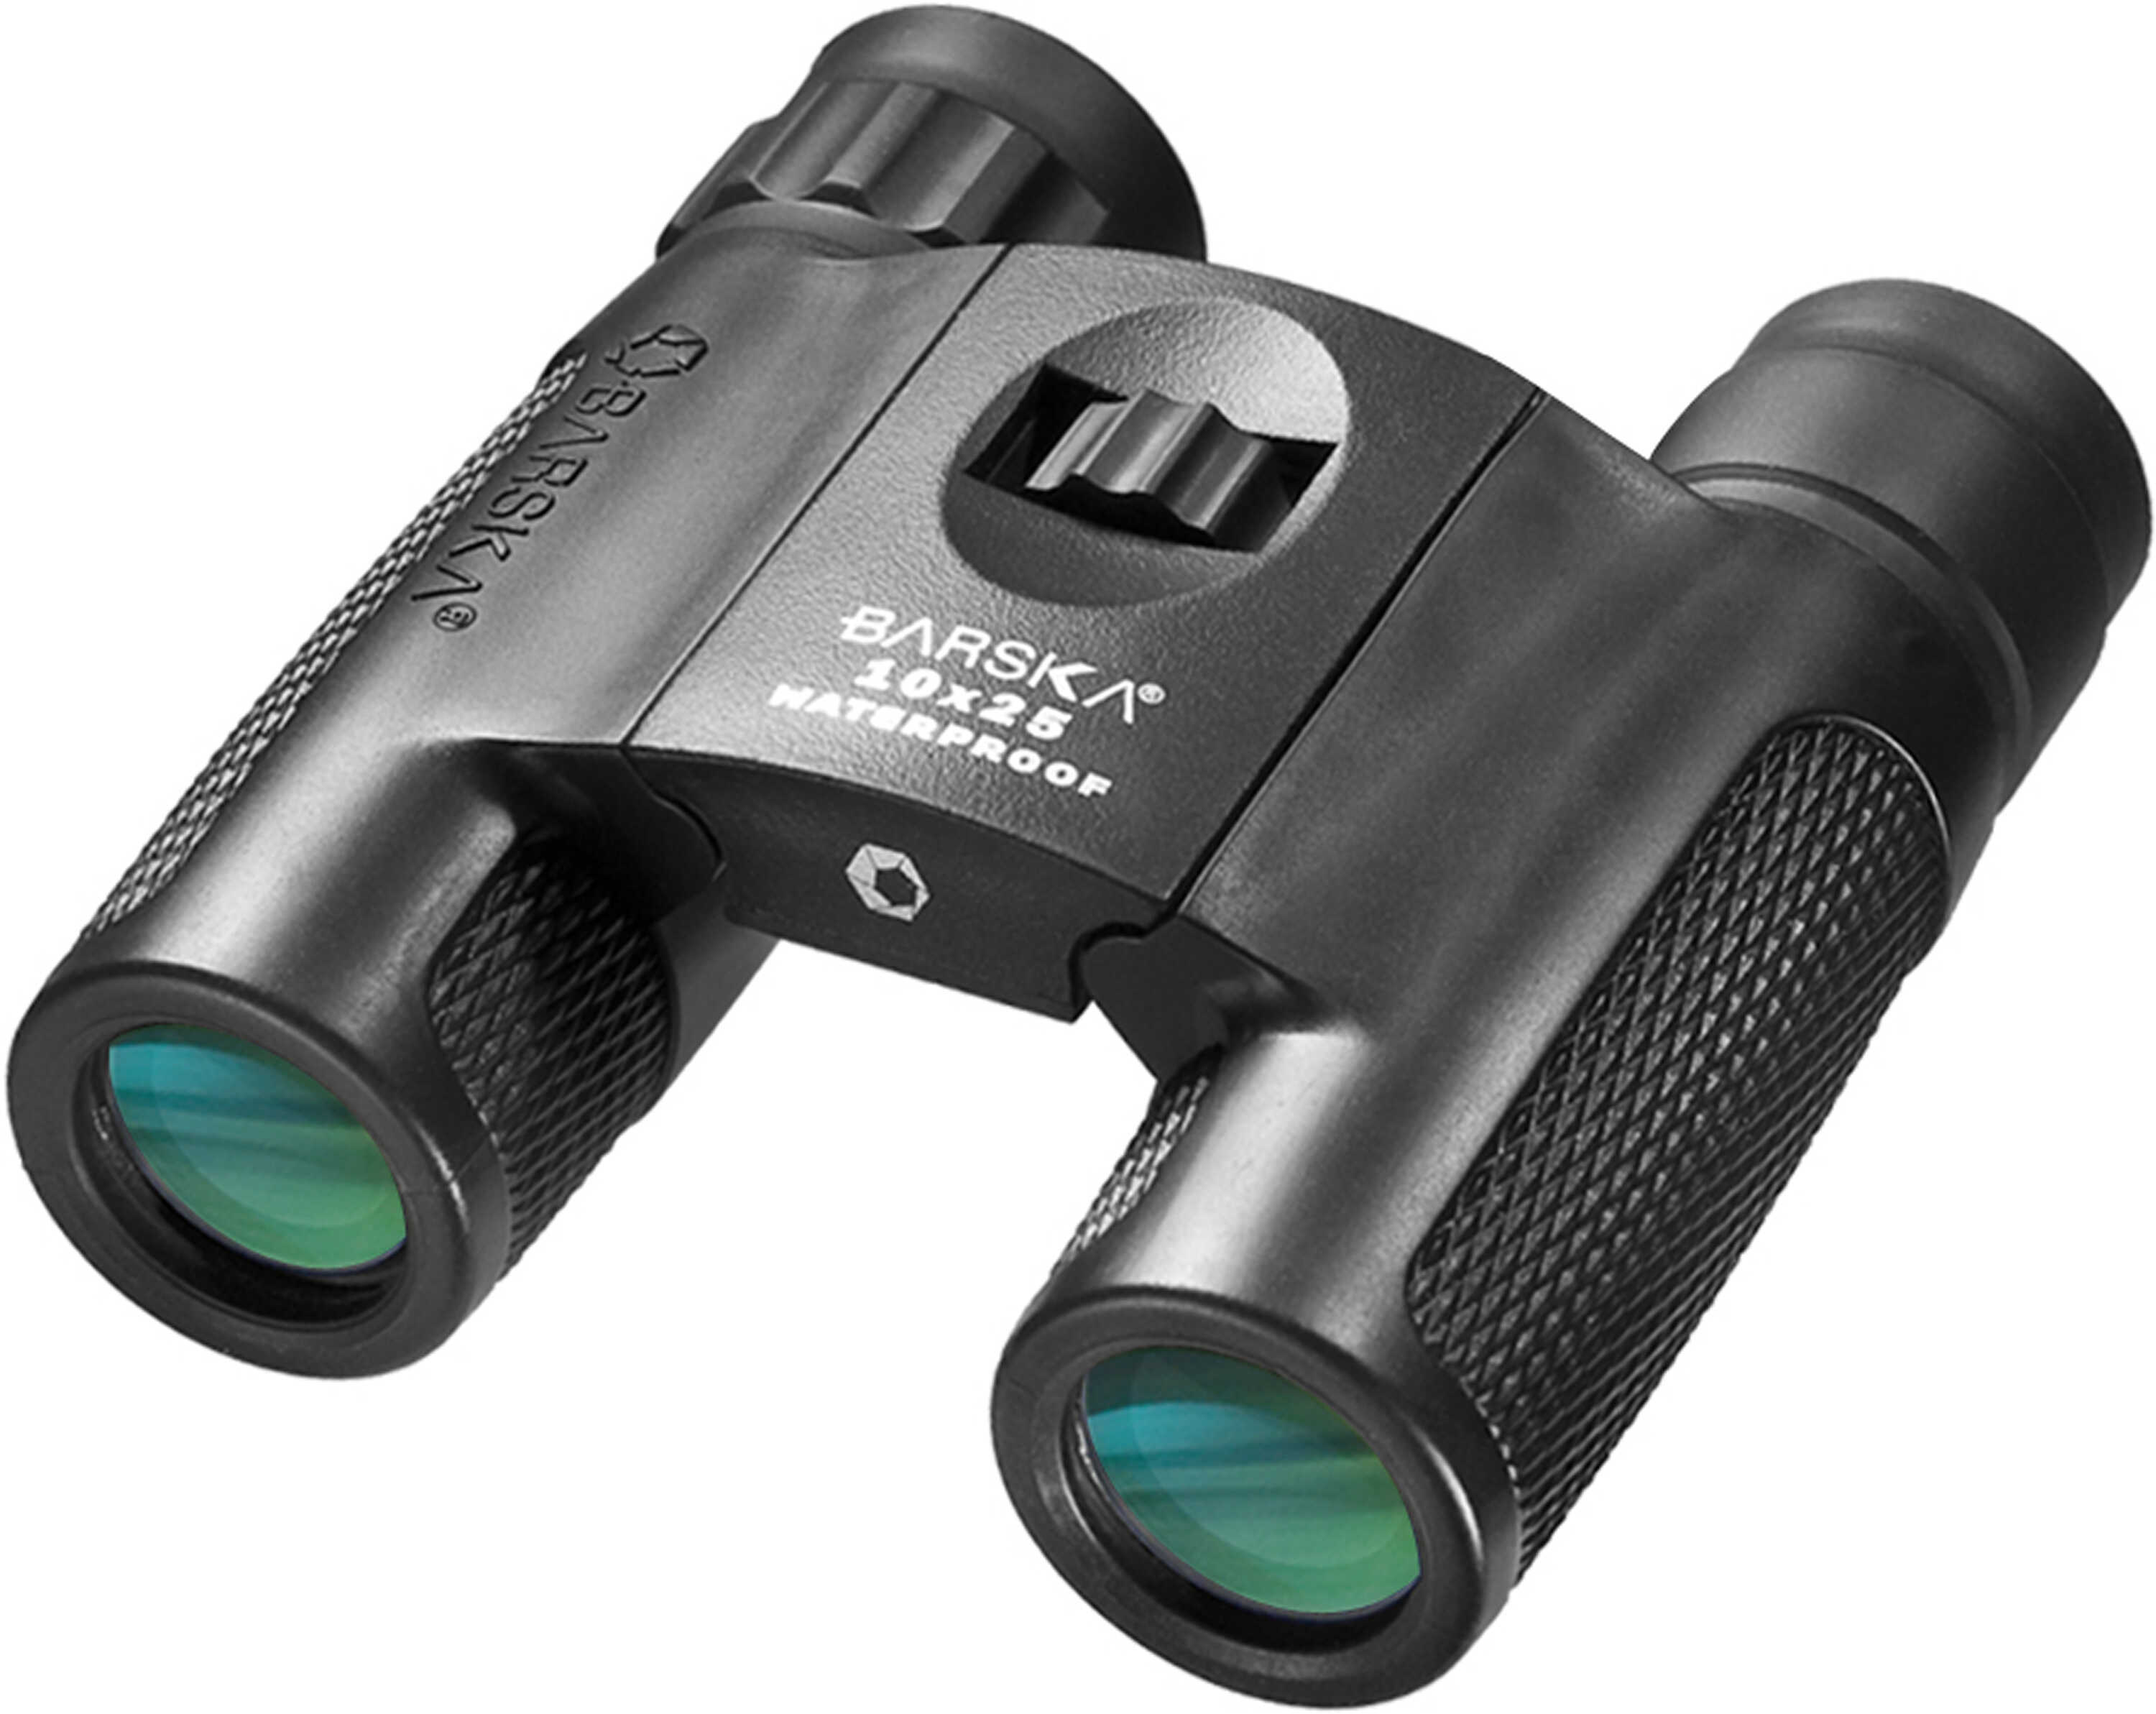 Barska Blackhawk Waterproof Binocular 10X25mm Matte Finish Includes Carrying Case Lens Covers Neck Strap and